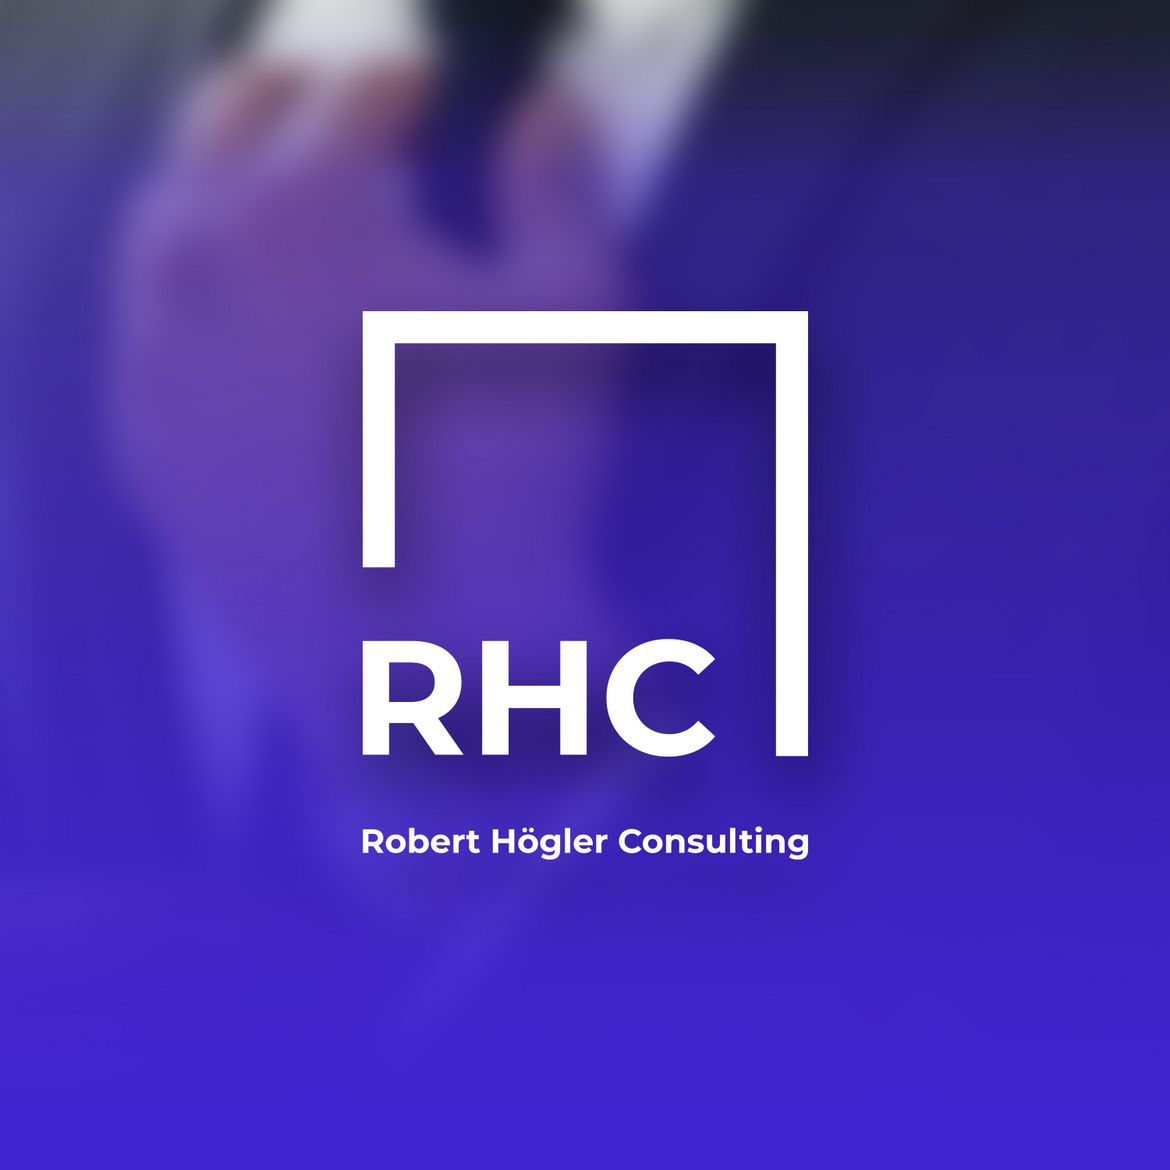 Darstellung der RH Consulting CI